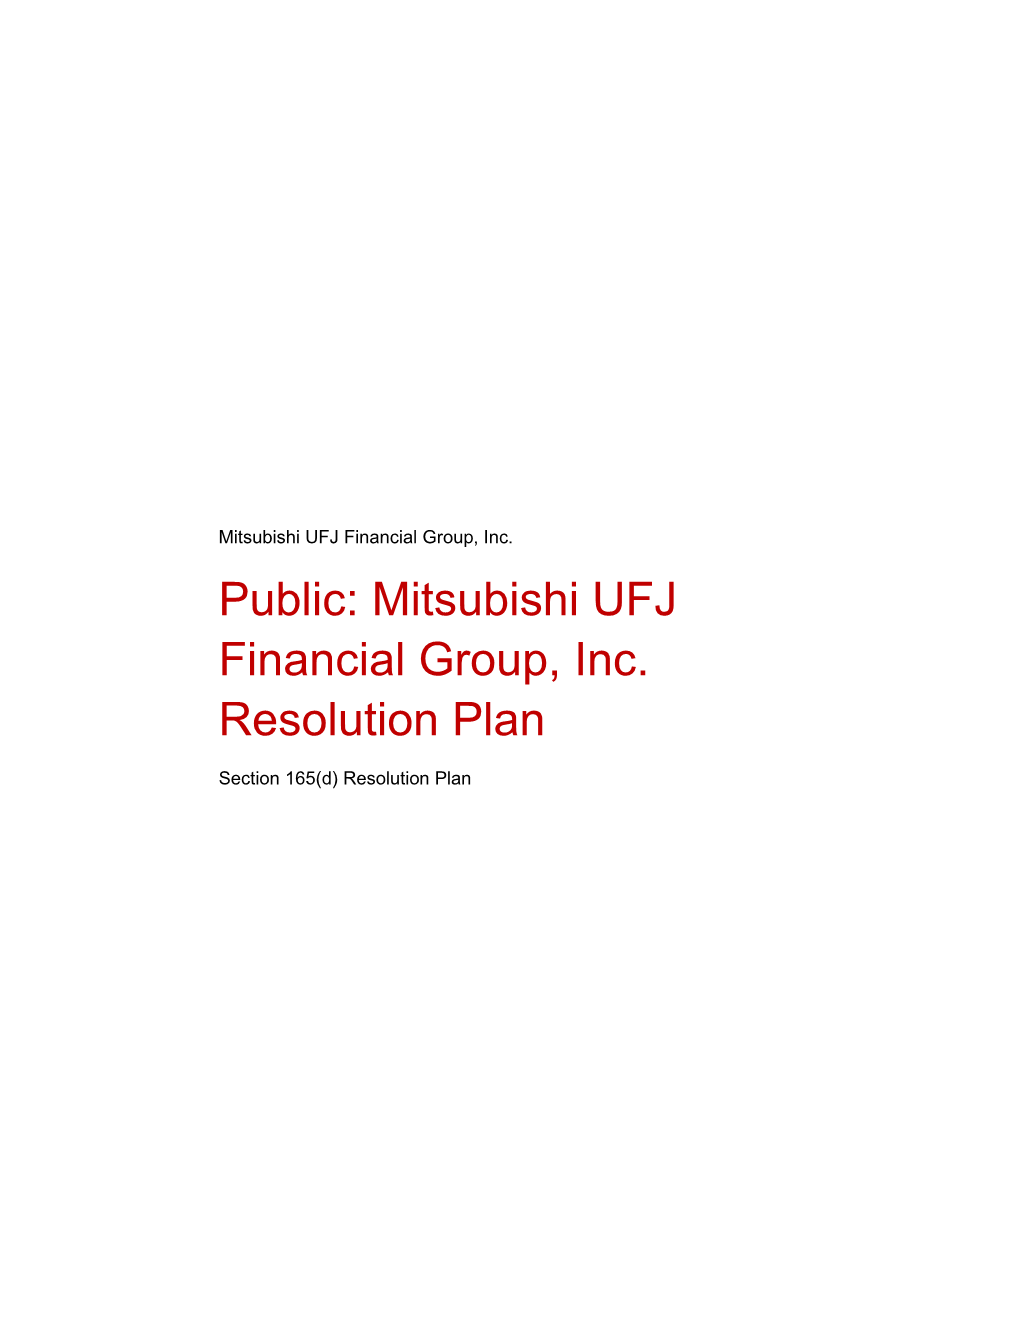 Mitsubishi UFJ Financial Group, Inc. Public: Mitsubishi UFJ Financial Group, Inc